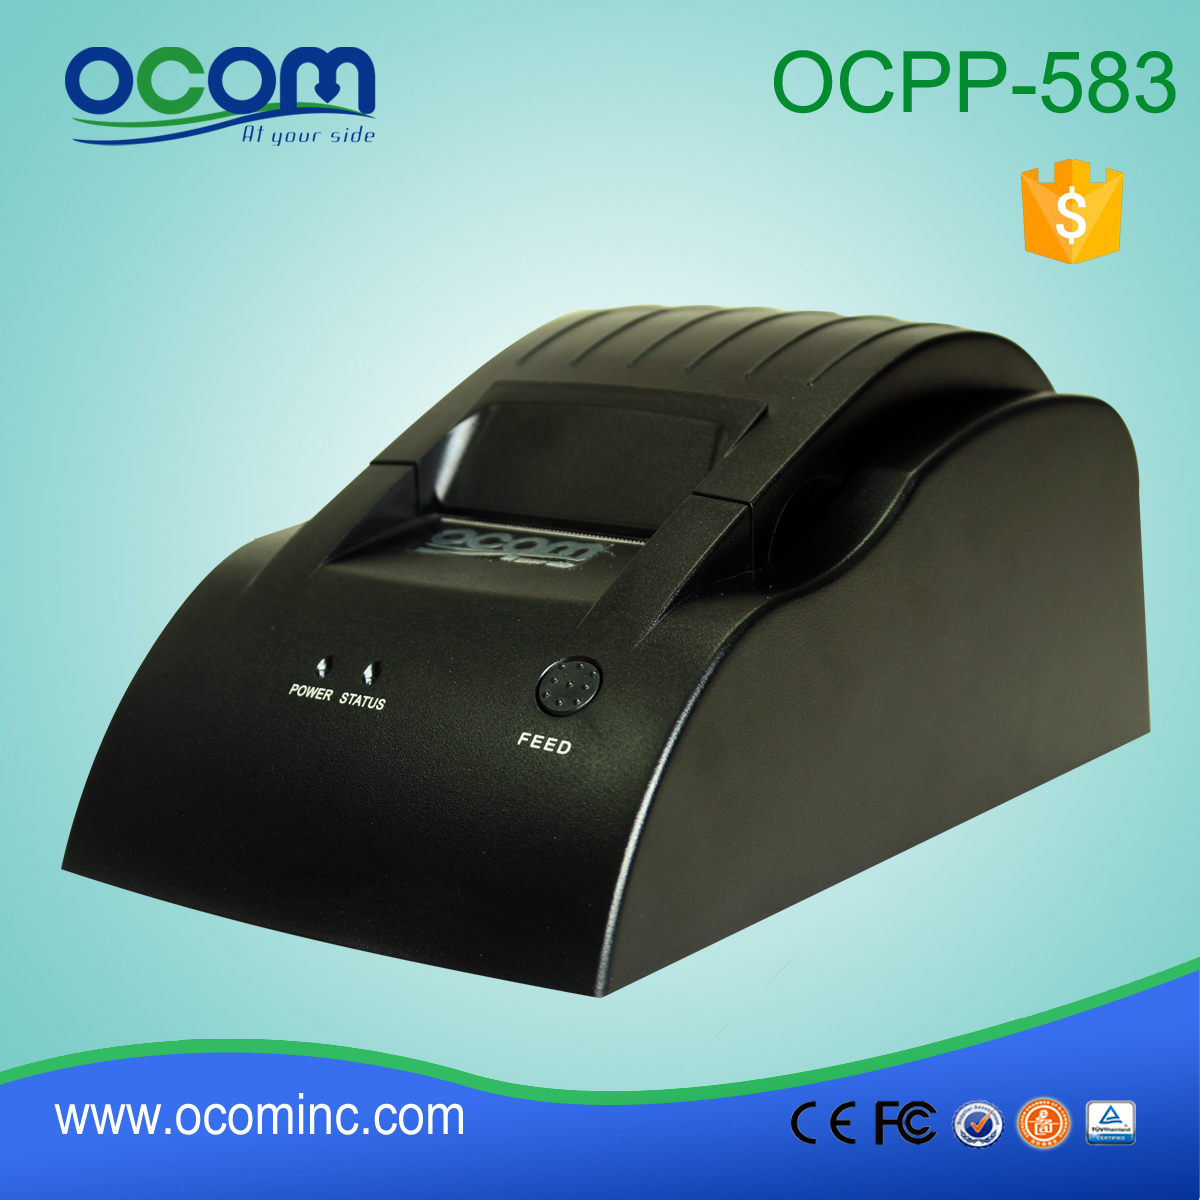 OCPP-583-L Desktop Impressora de recebimento térmico de 58mm LAN Interface LAN